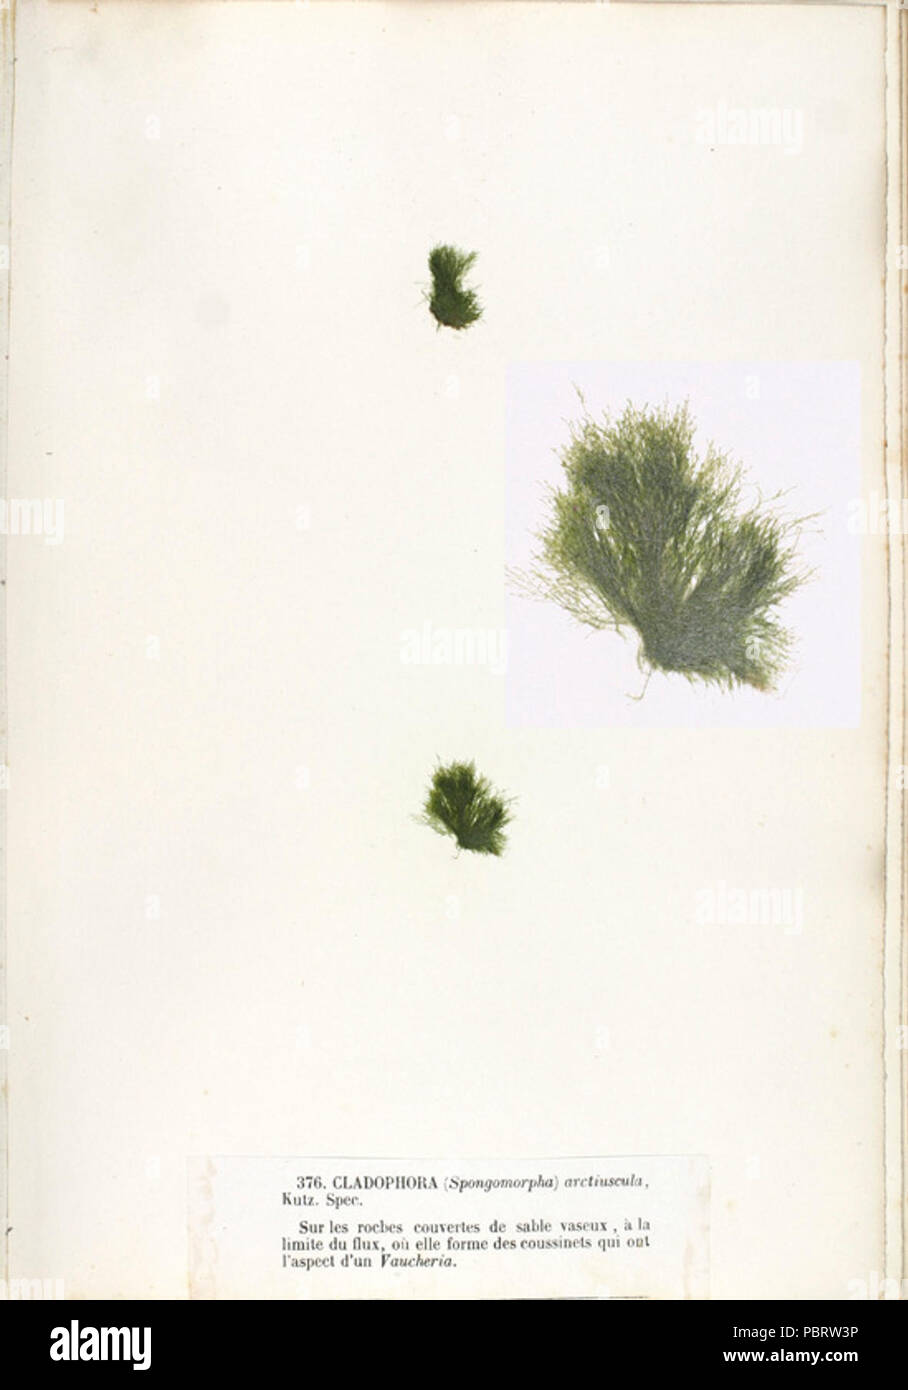 Acrosiphonia arcta 3 Crouan. Stock Photo